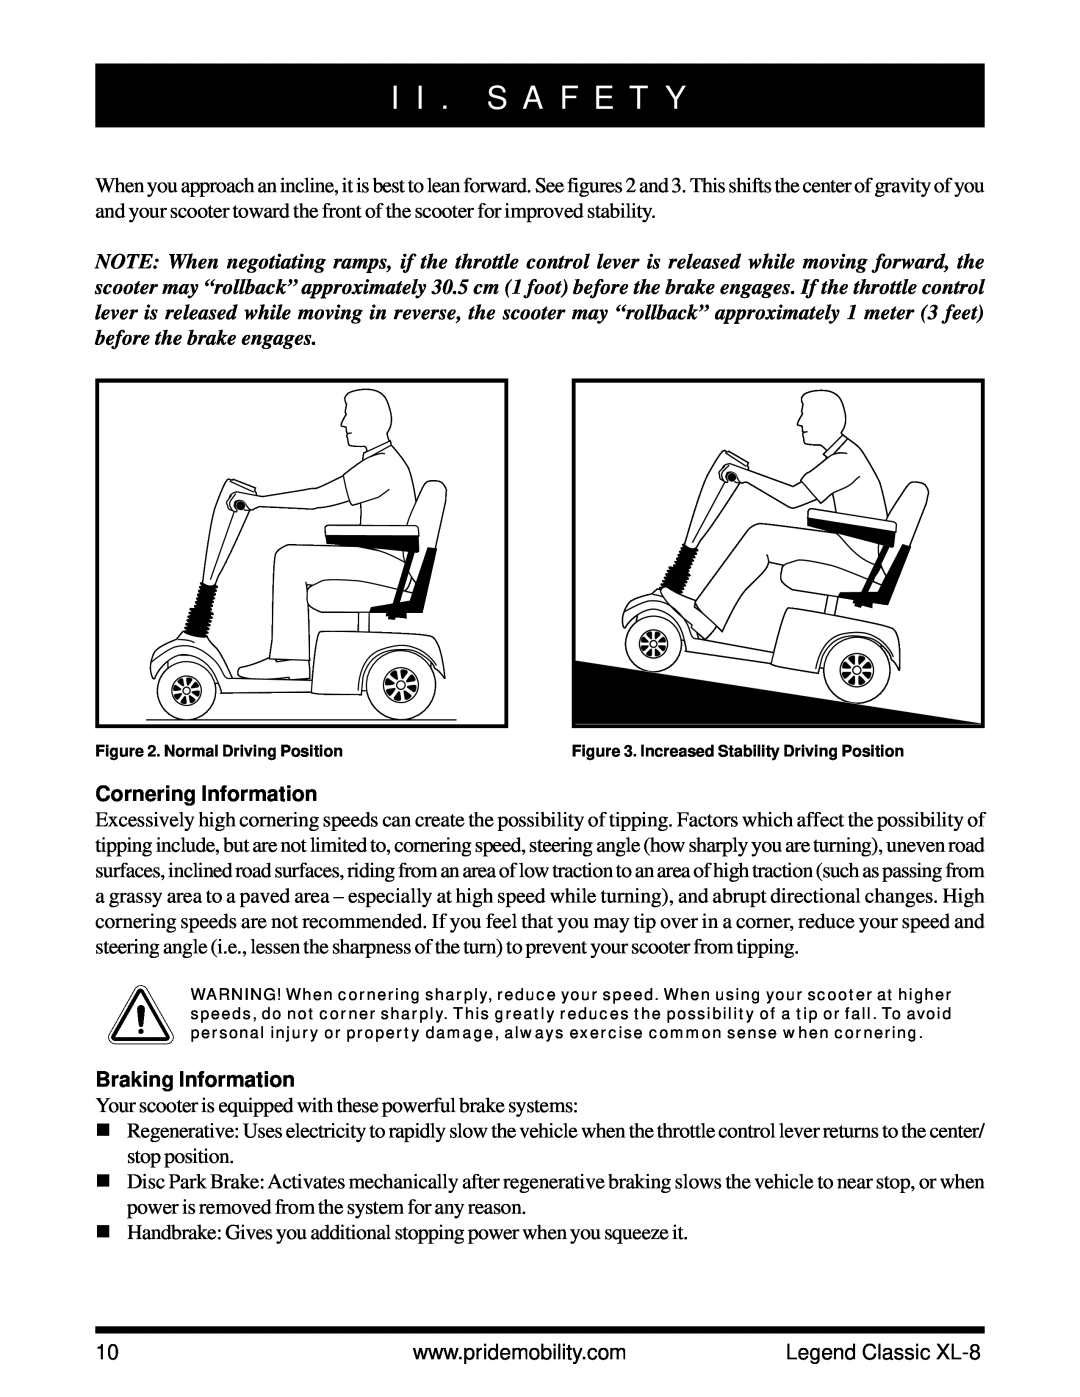 Pride Mobility XL-8 owner manual Cornering Information, Braking Information, I I . S A F E T Y 